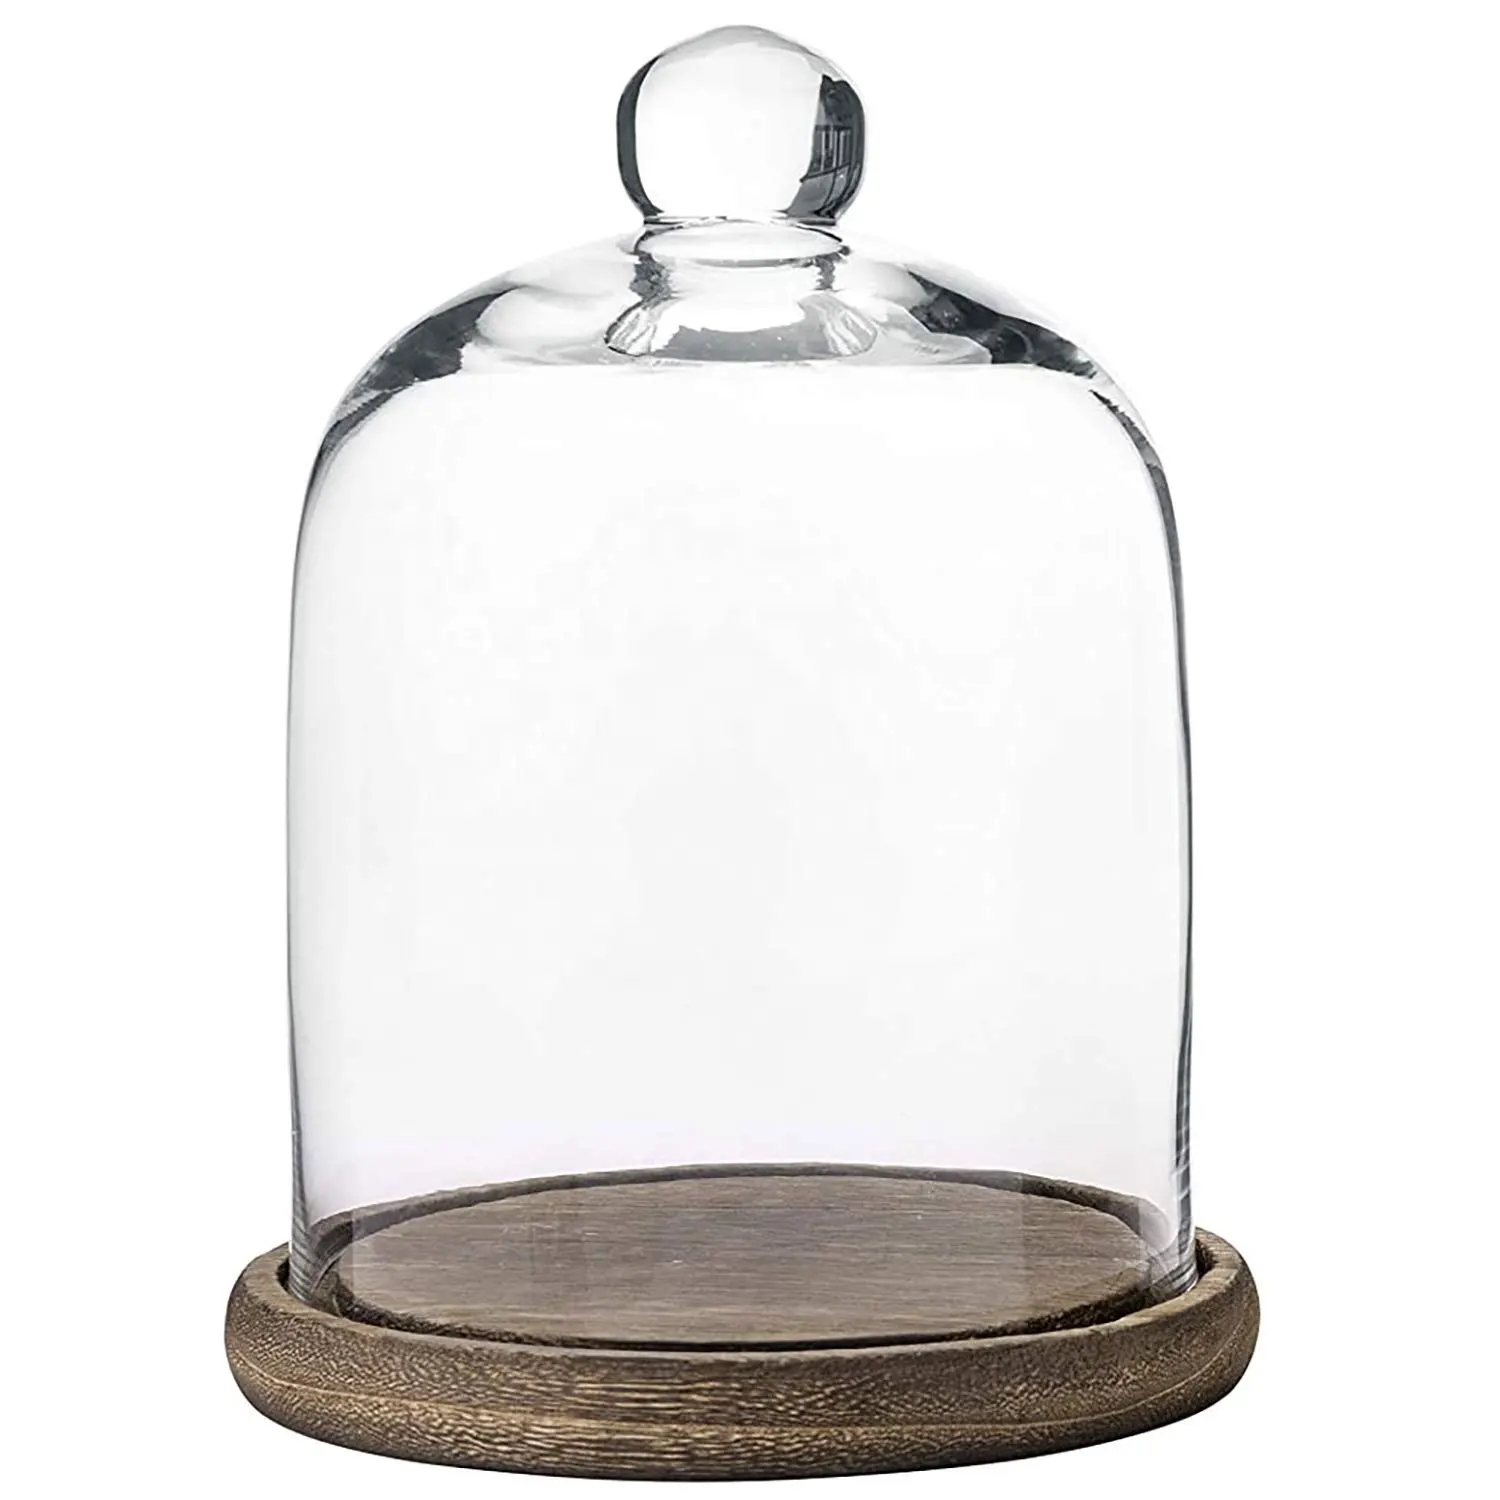 Caja decorativa de centro de mesa personalizada, campana de cristal transparente, campana, campana, cúpula con asa superior y base de madera marrón